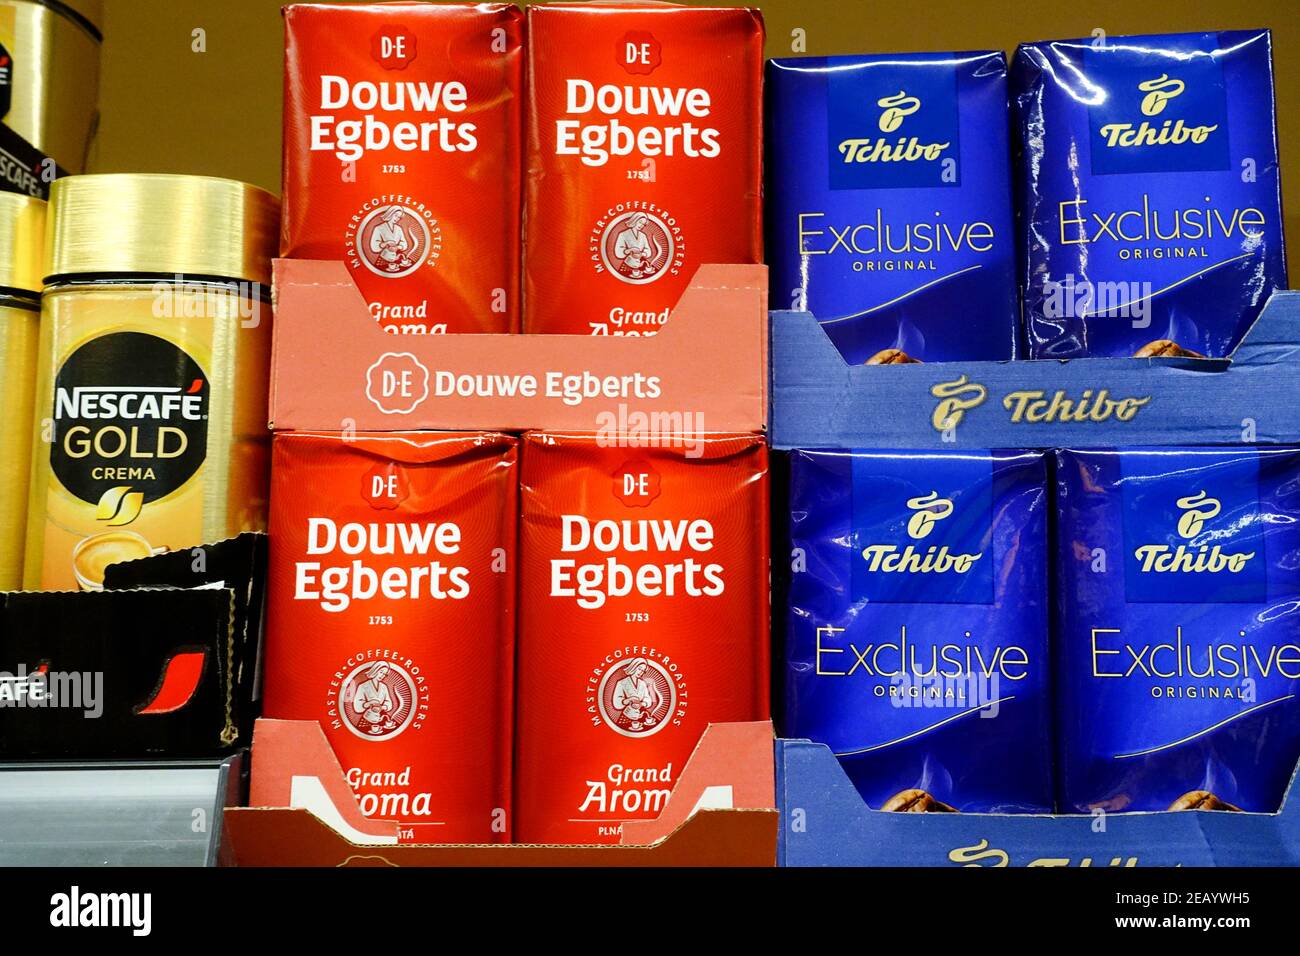 Estantes café supermercado Douwe Egberts Nescafe Tchibo Foto de stock